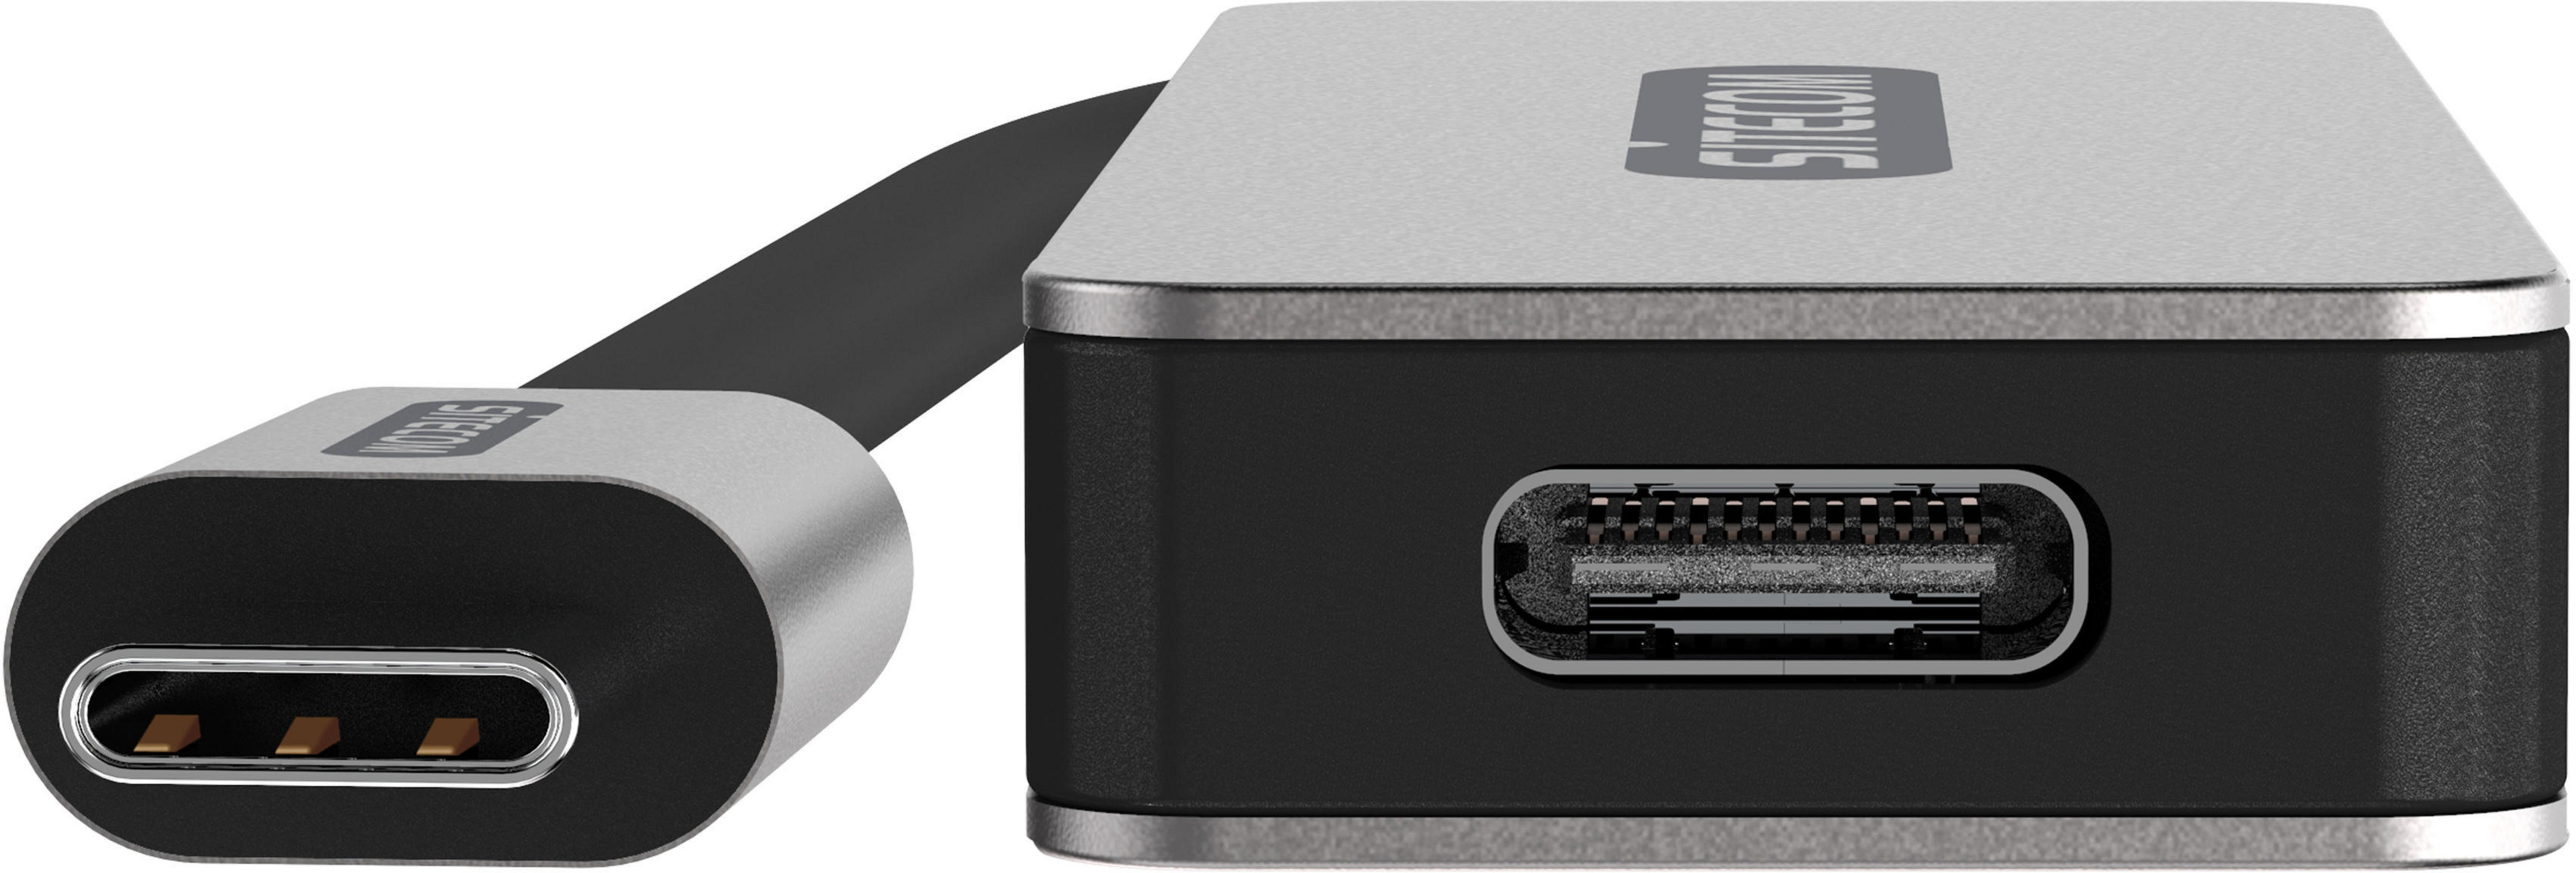 HUB USB-C 2XUSB-A2XUSB-C Hub, Silber CN-384 3.1 USB SITECOM